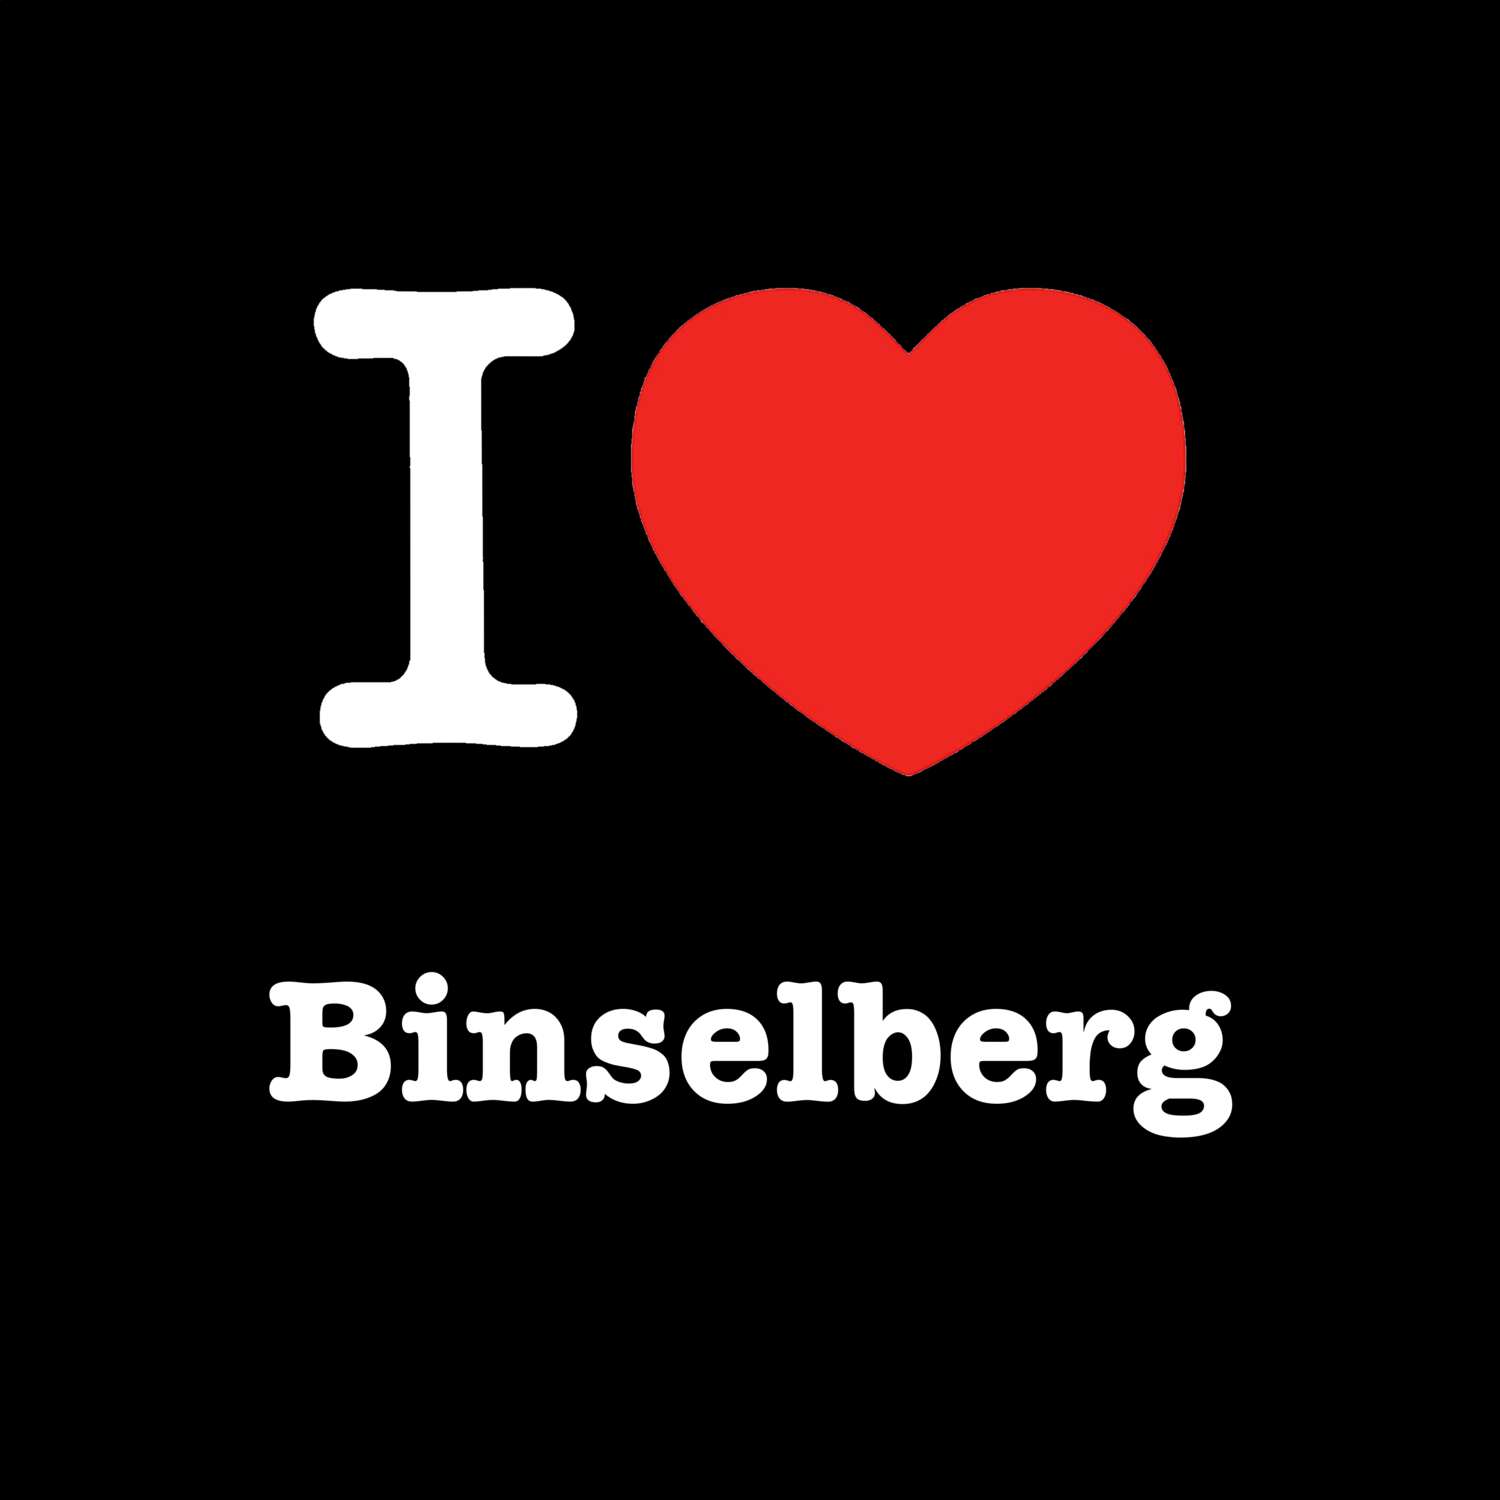 Binselberg T-Shirt »I love«